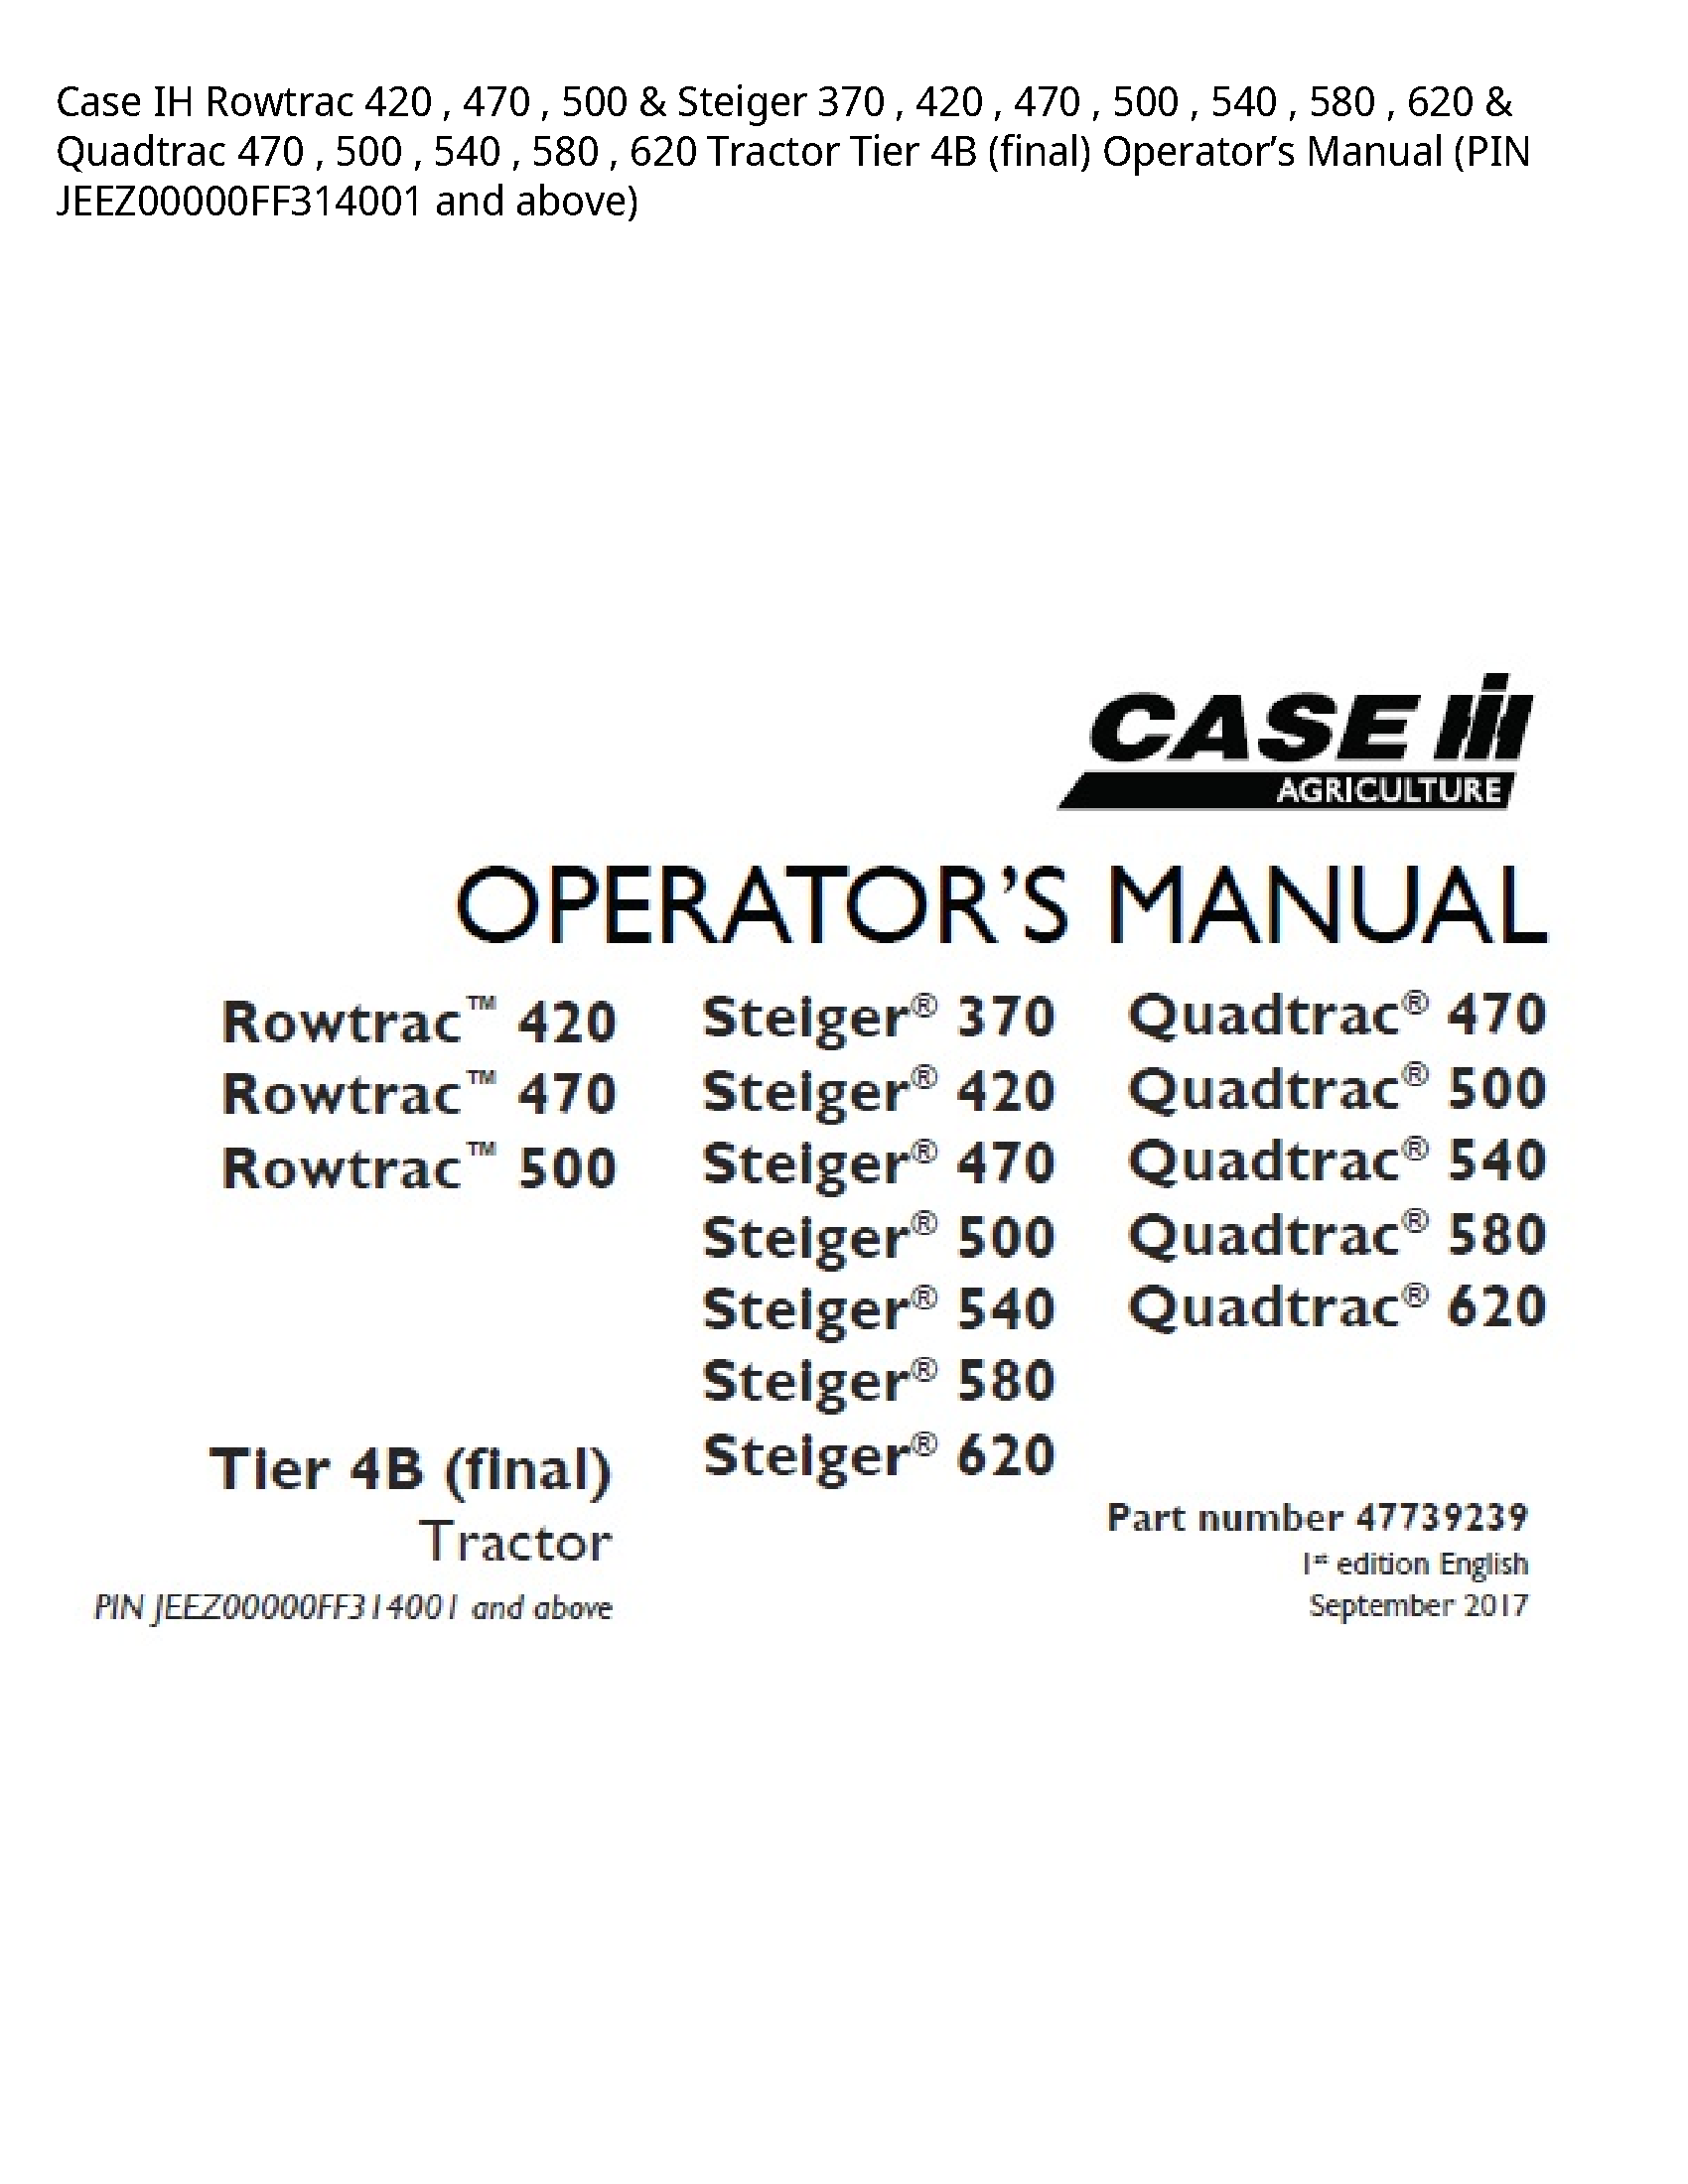 Case/Case IH 420 IH Rowtrac Steiger Quadtrac Tractor Tier (final) Operator’s manual